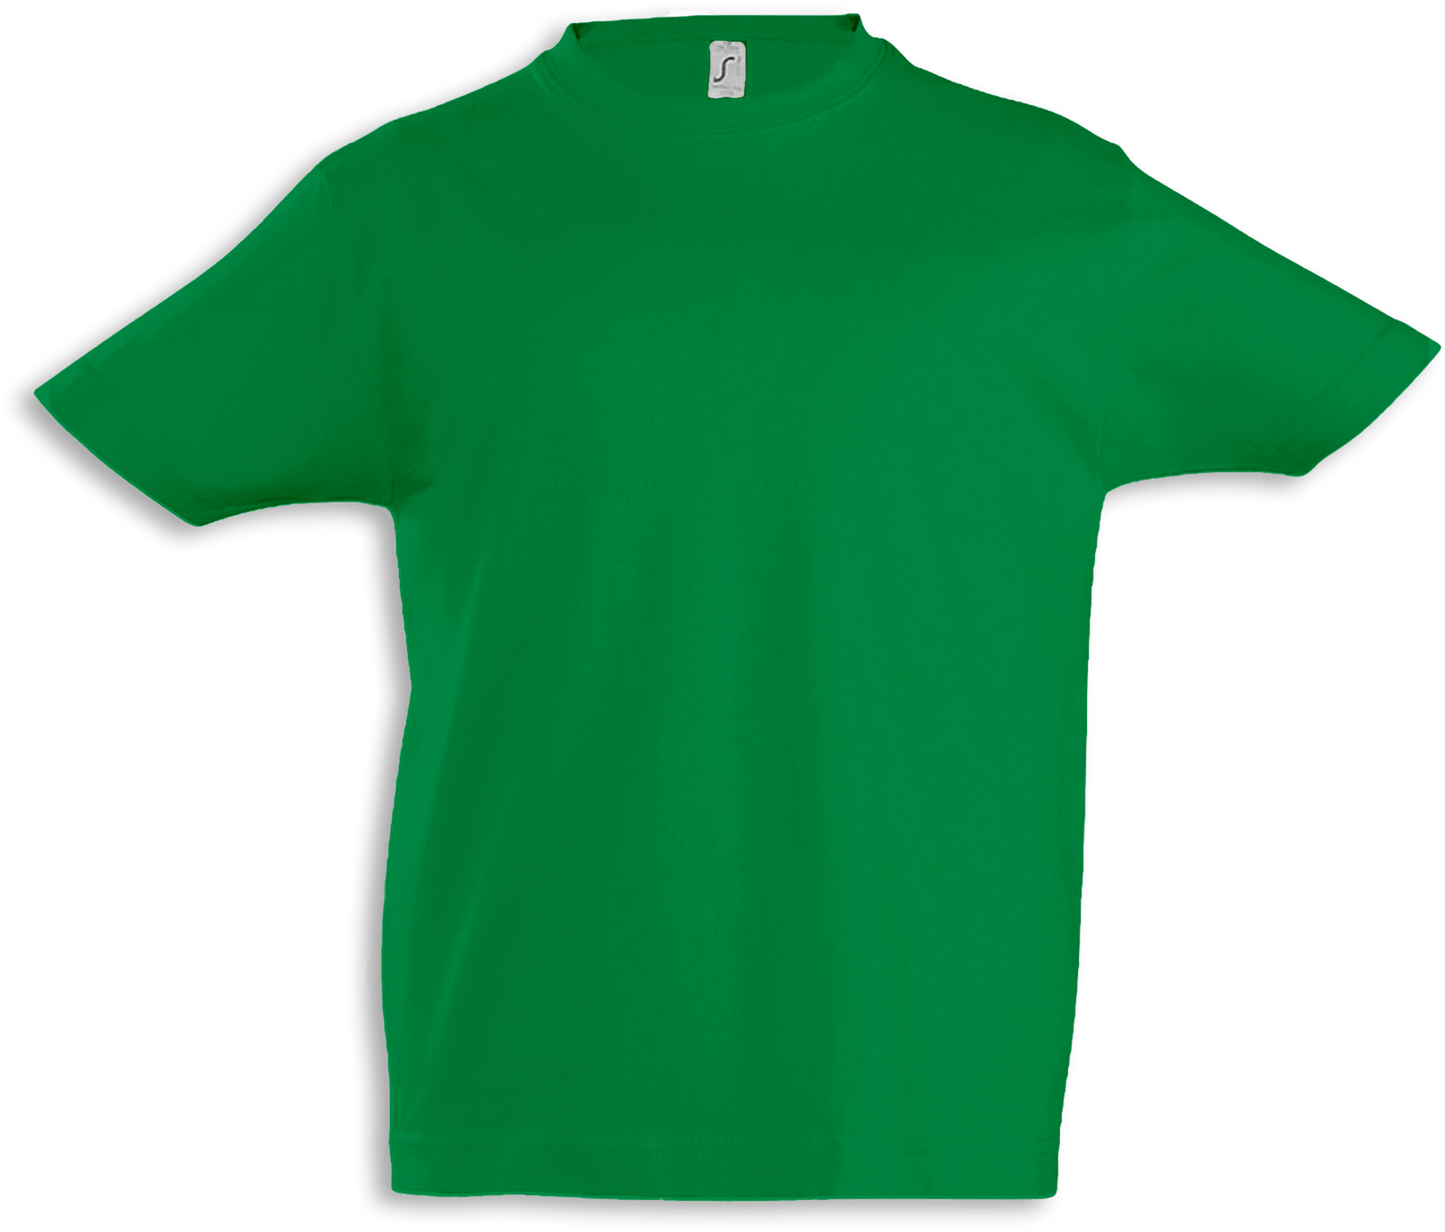 Basic T-Shirt für Kinder